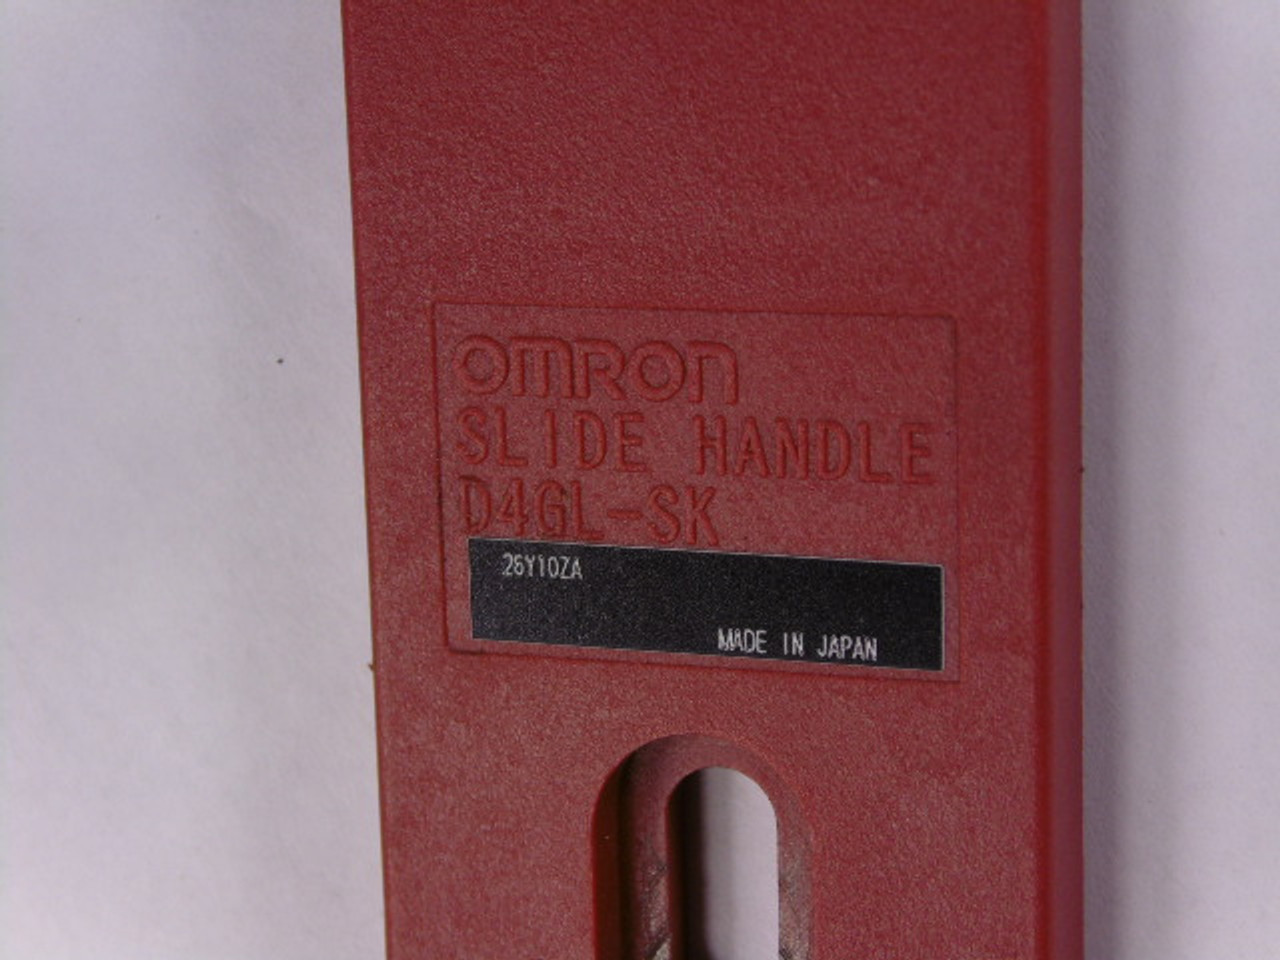 Omron D4GL-SK Slide Handle USED